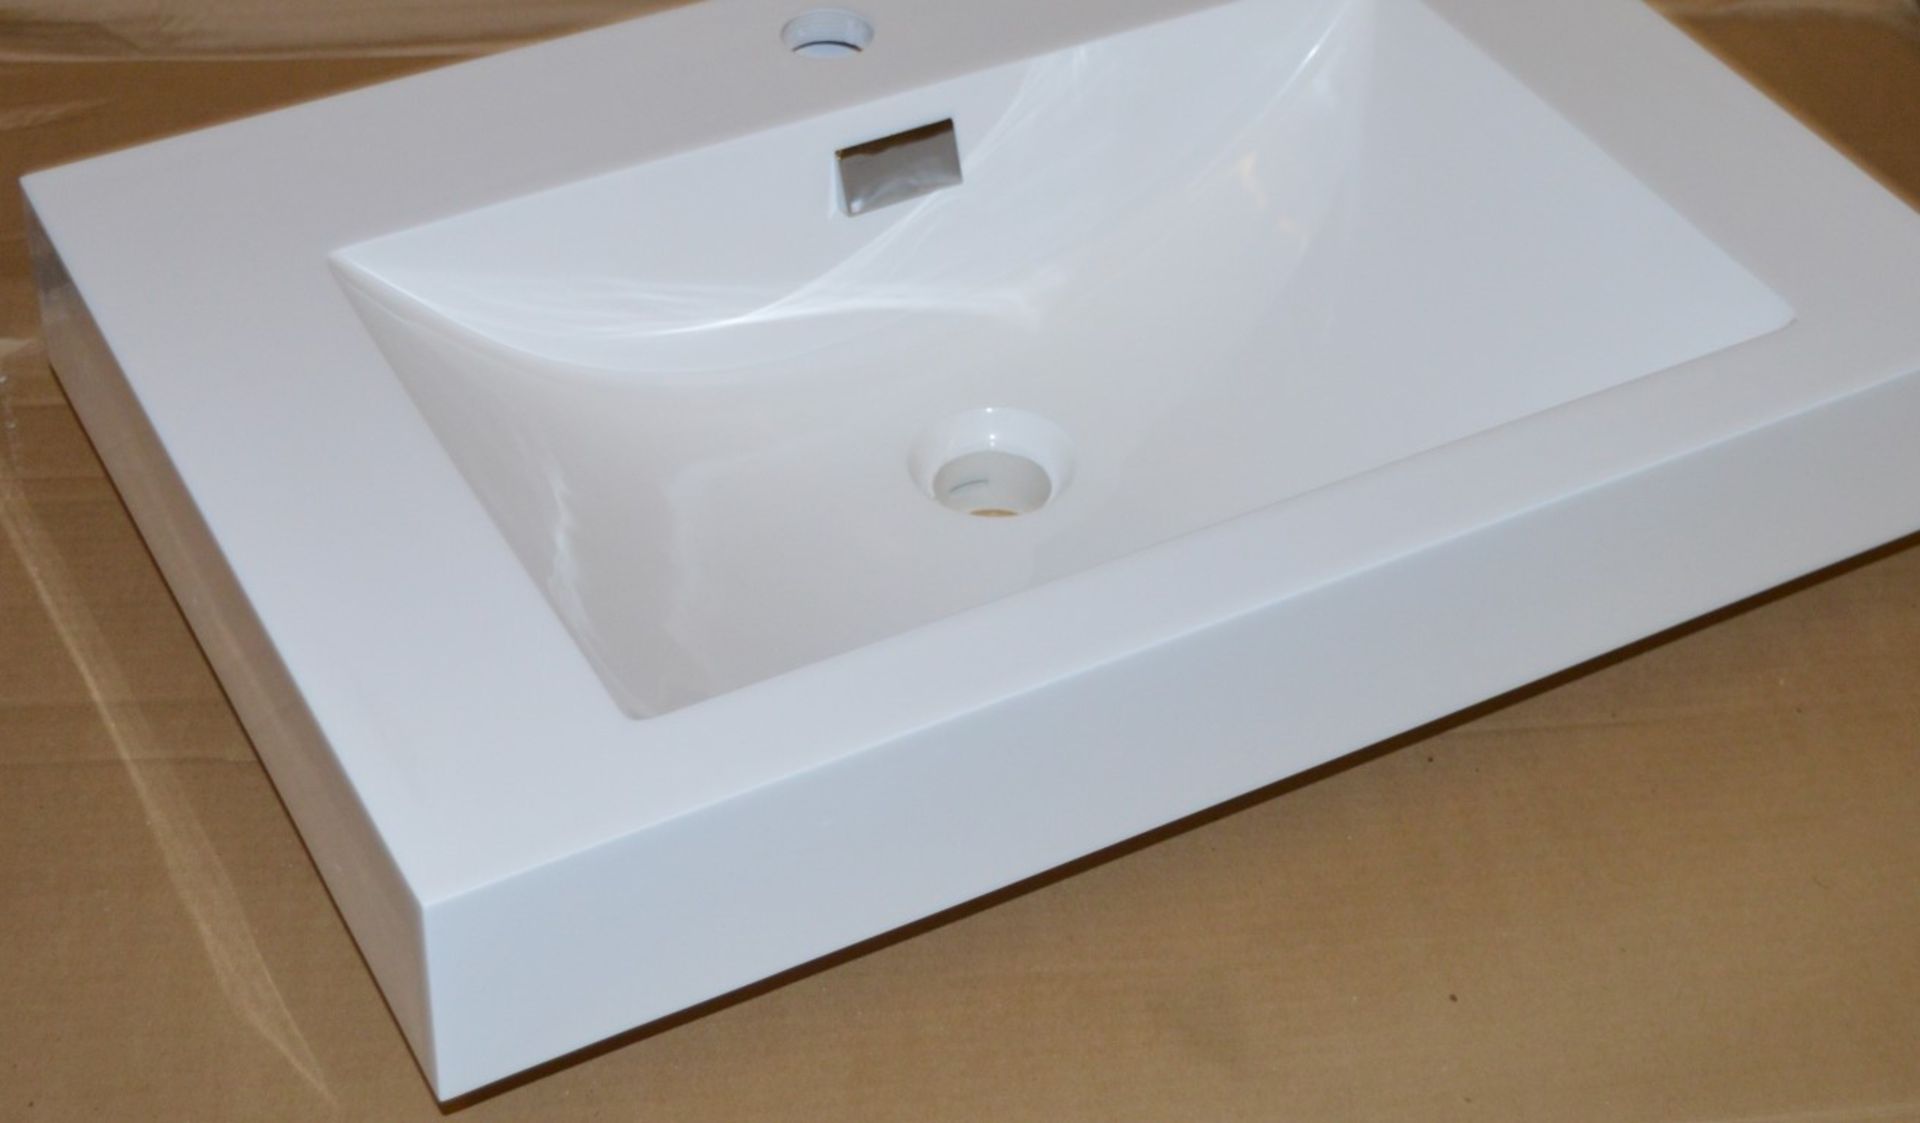 10 x Vogue Bathrooms JUNO Single Tap Hole Inset Sink Basins - 600mm Width - Product Code 1VFJU60 - - Image 2 of 7